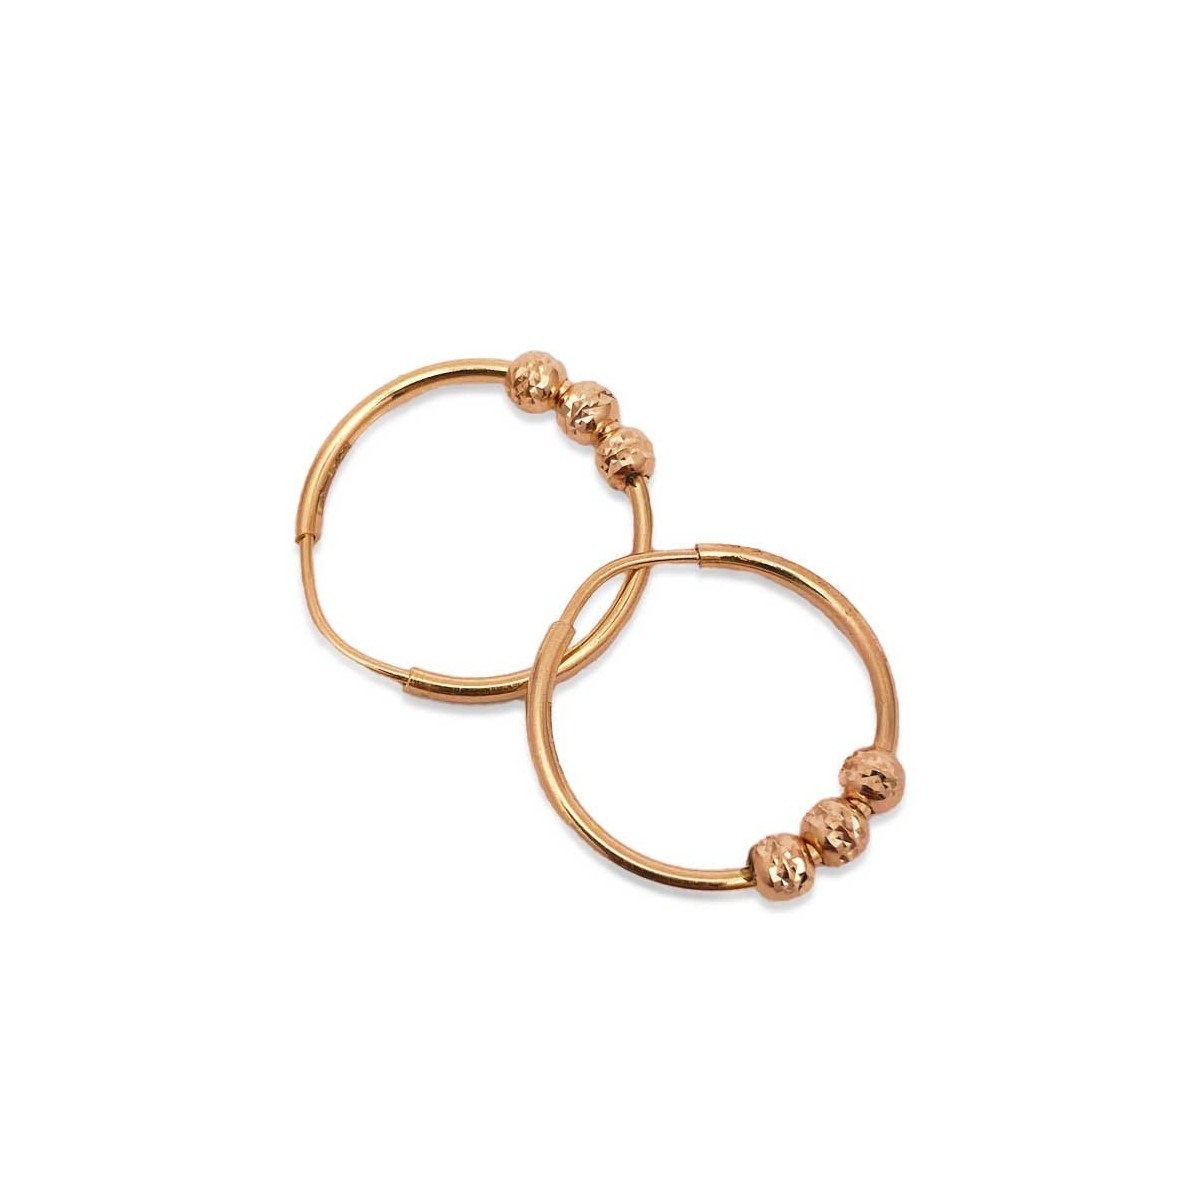 Rose Gold Hoops Earrings w/ Copper Beads, Size Medium